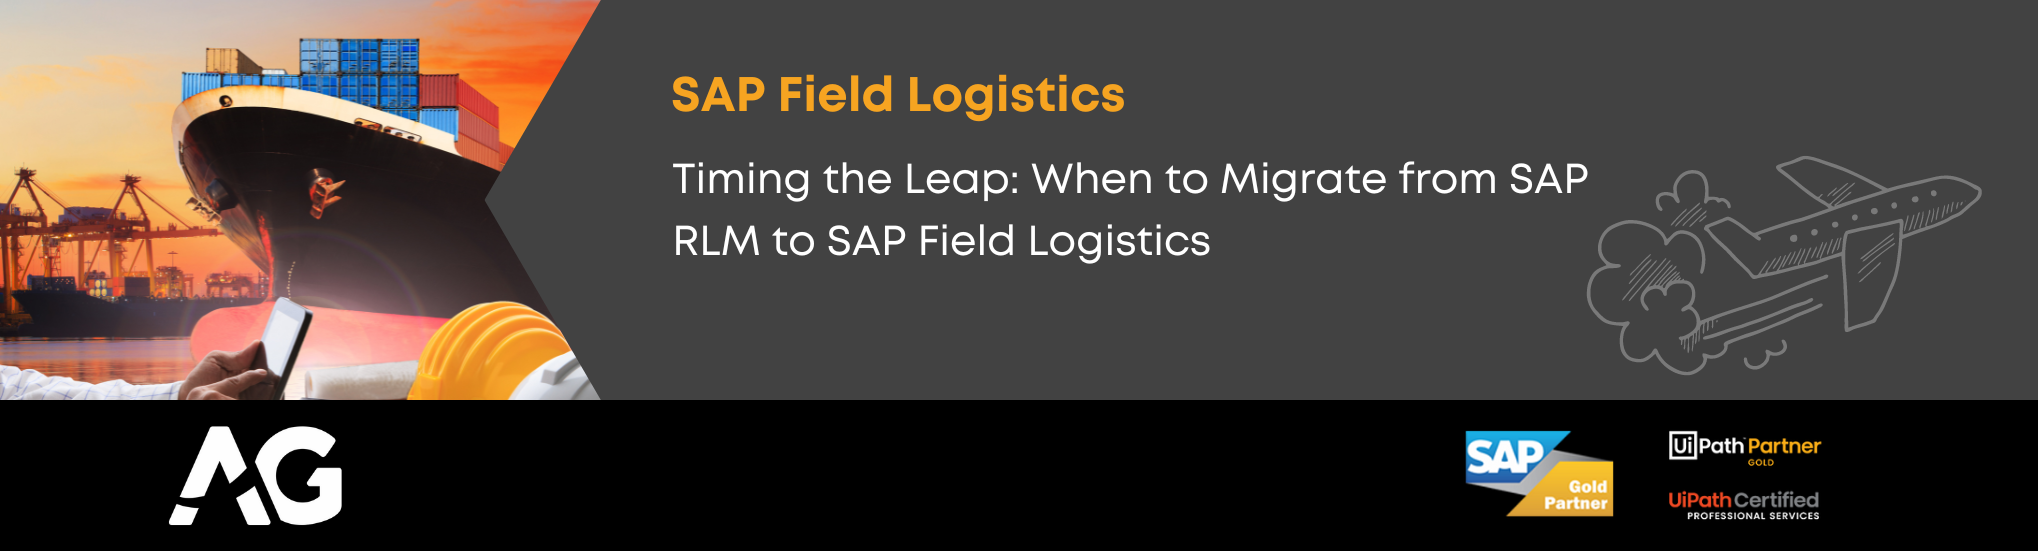 SAP RLM to SAP Field Logistics